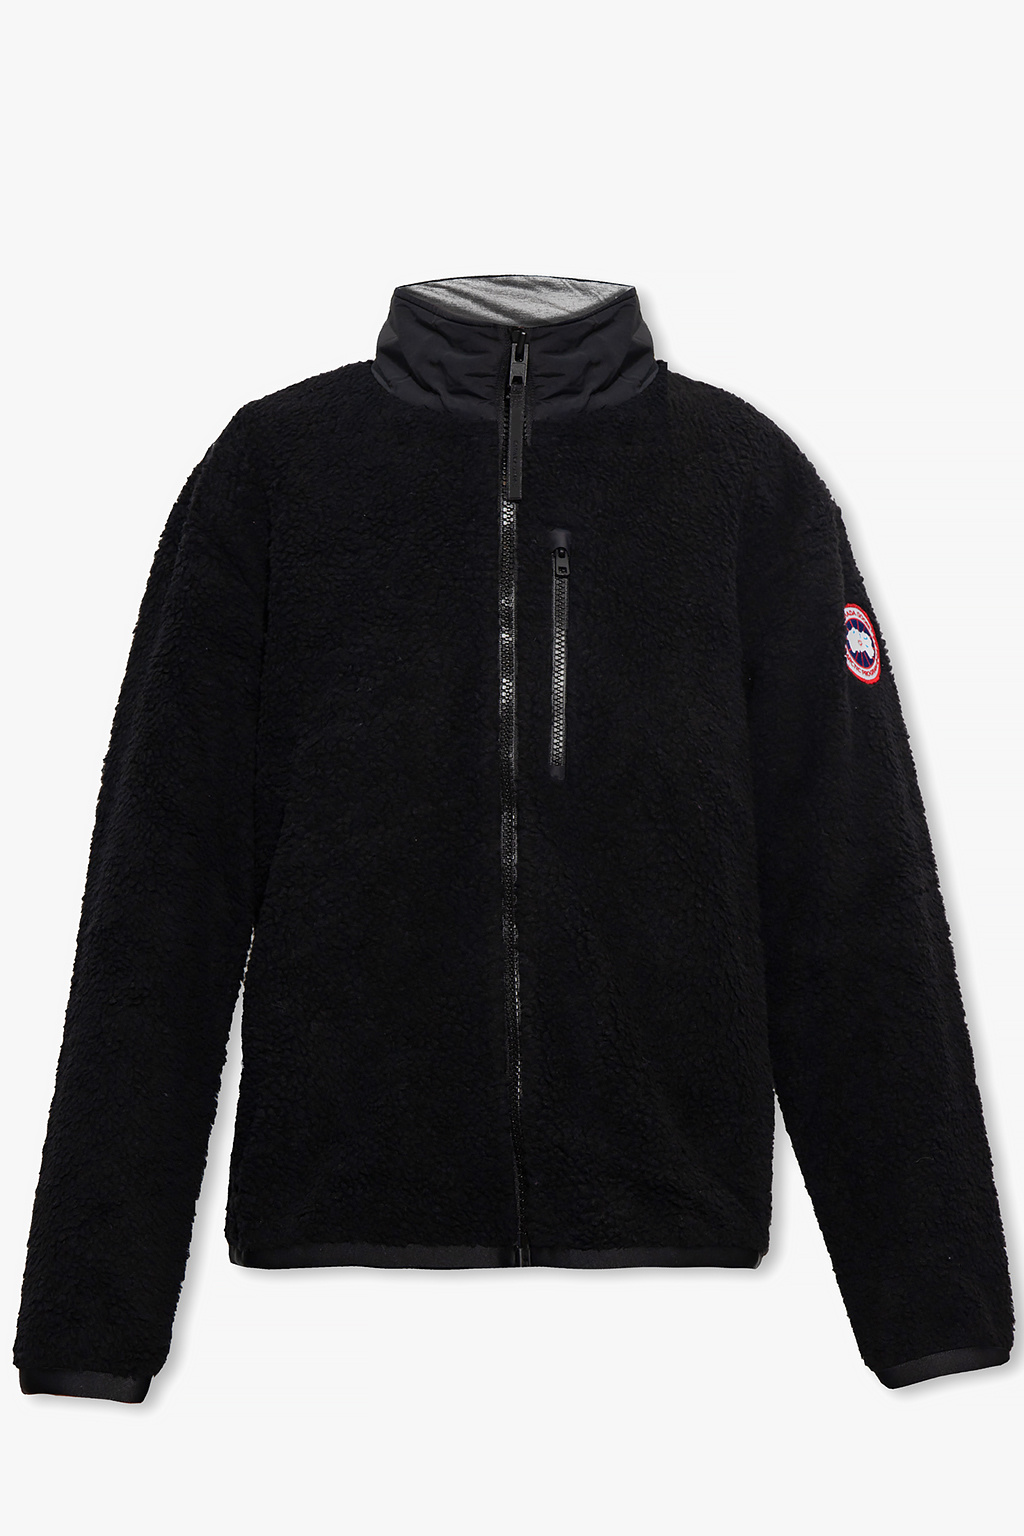 Black 'Kelowna' fleece jacket Canada Goose - Vitkac Canada